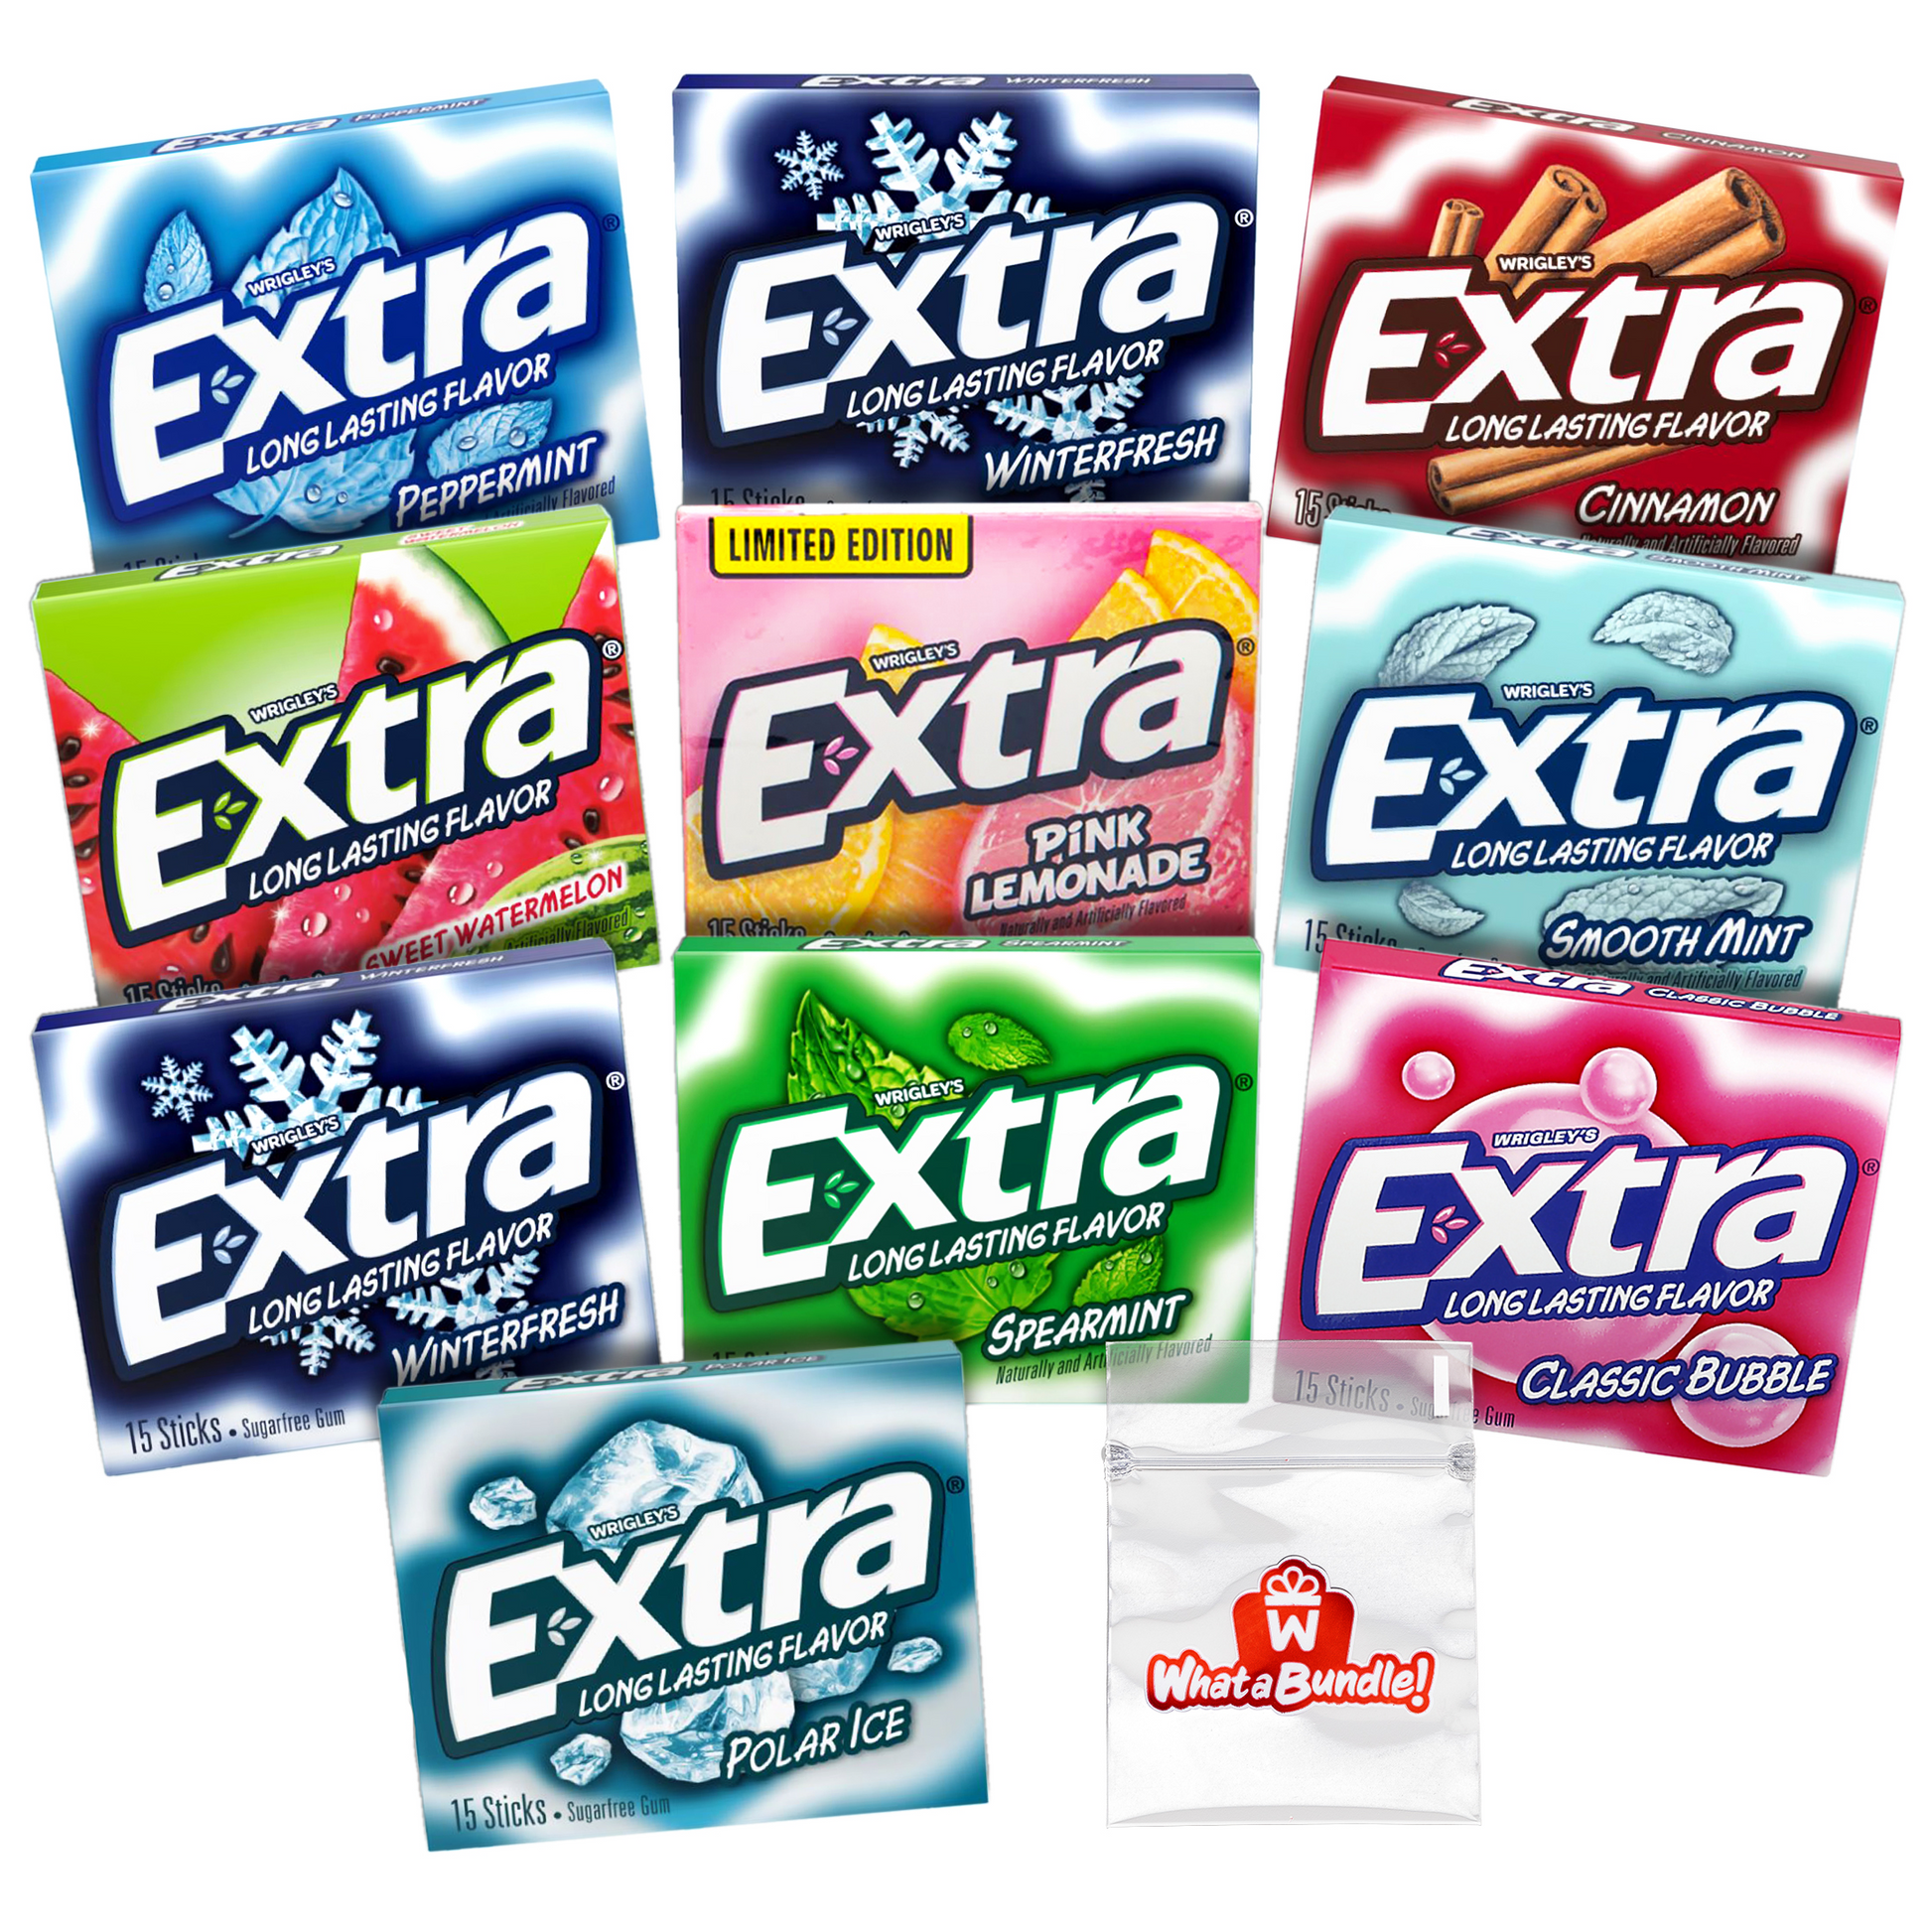 Extra Gum Variety 10 Pack – WhataBundle